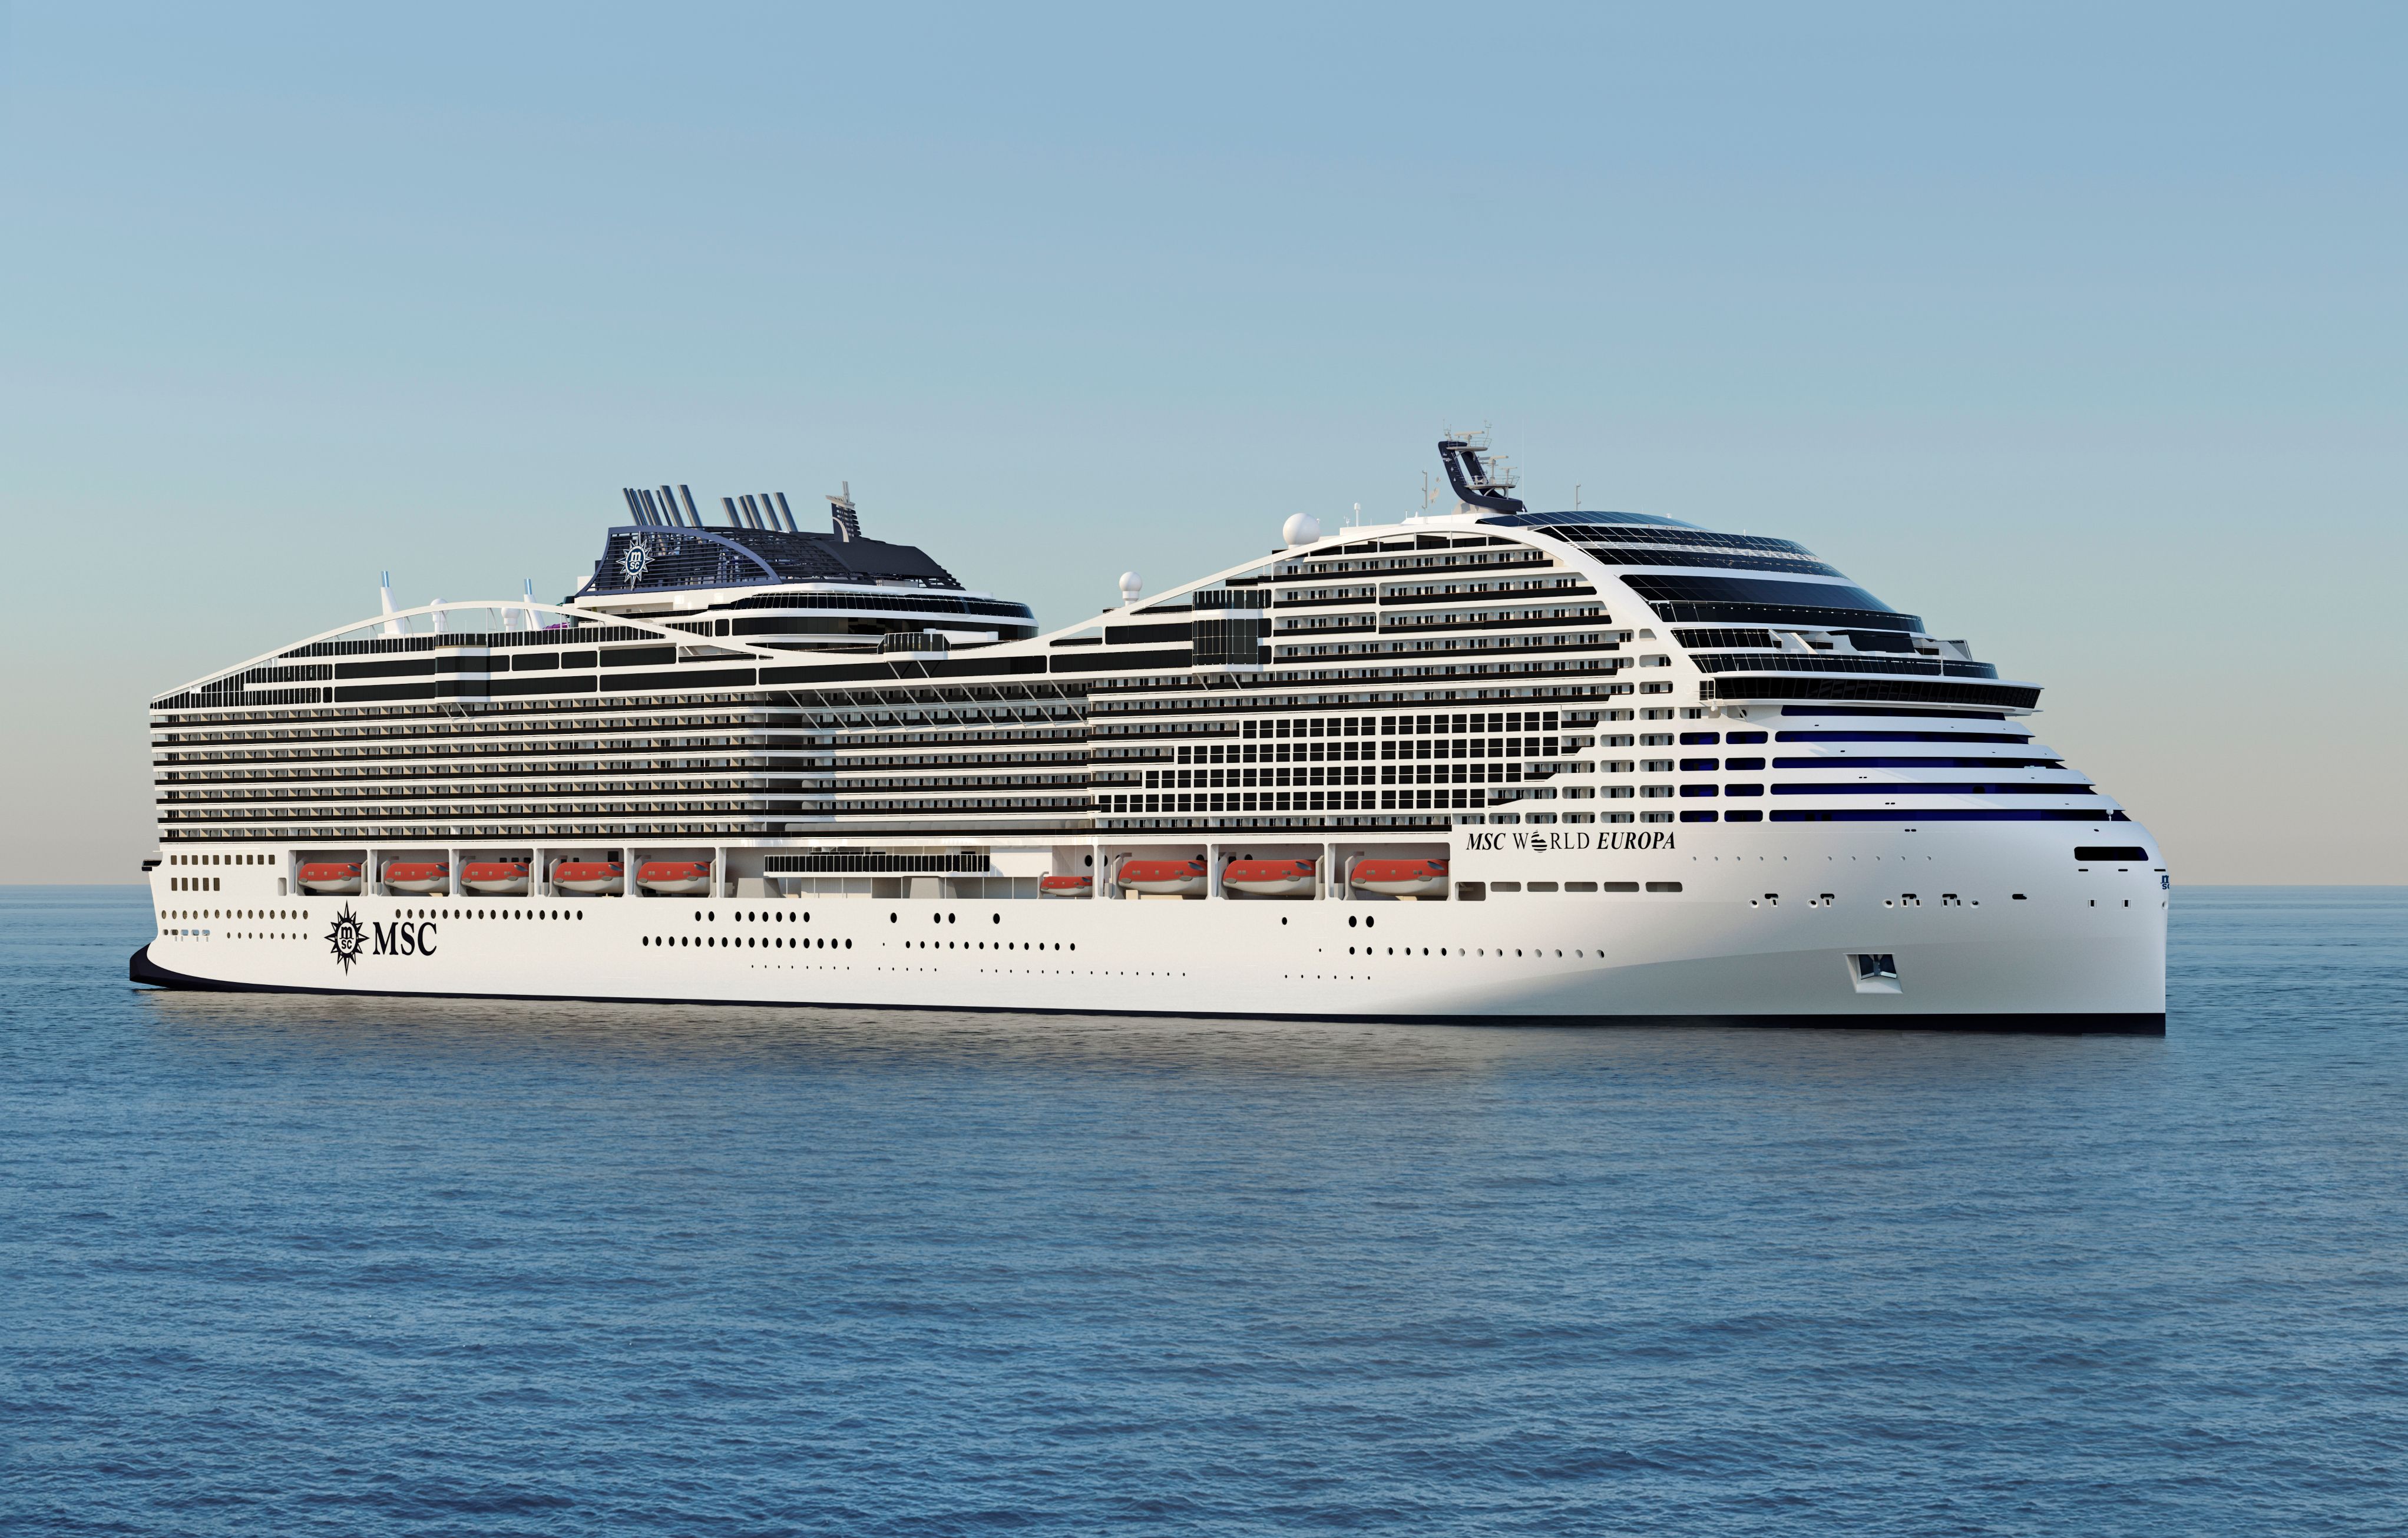 Hoverair X1 on MSC cruise? : r/Cruise